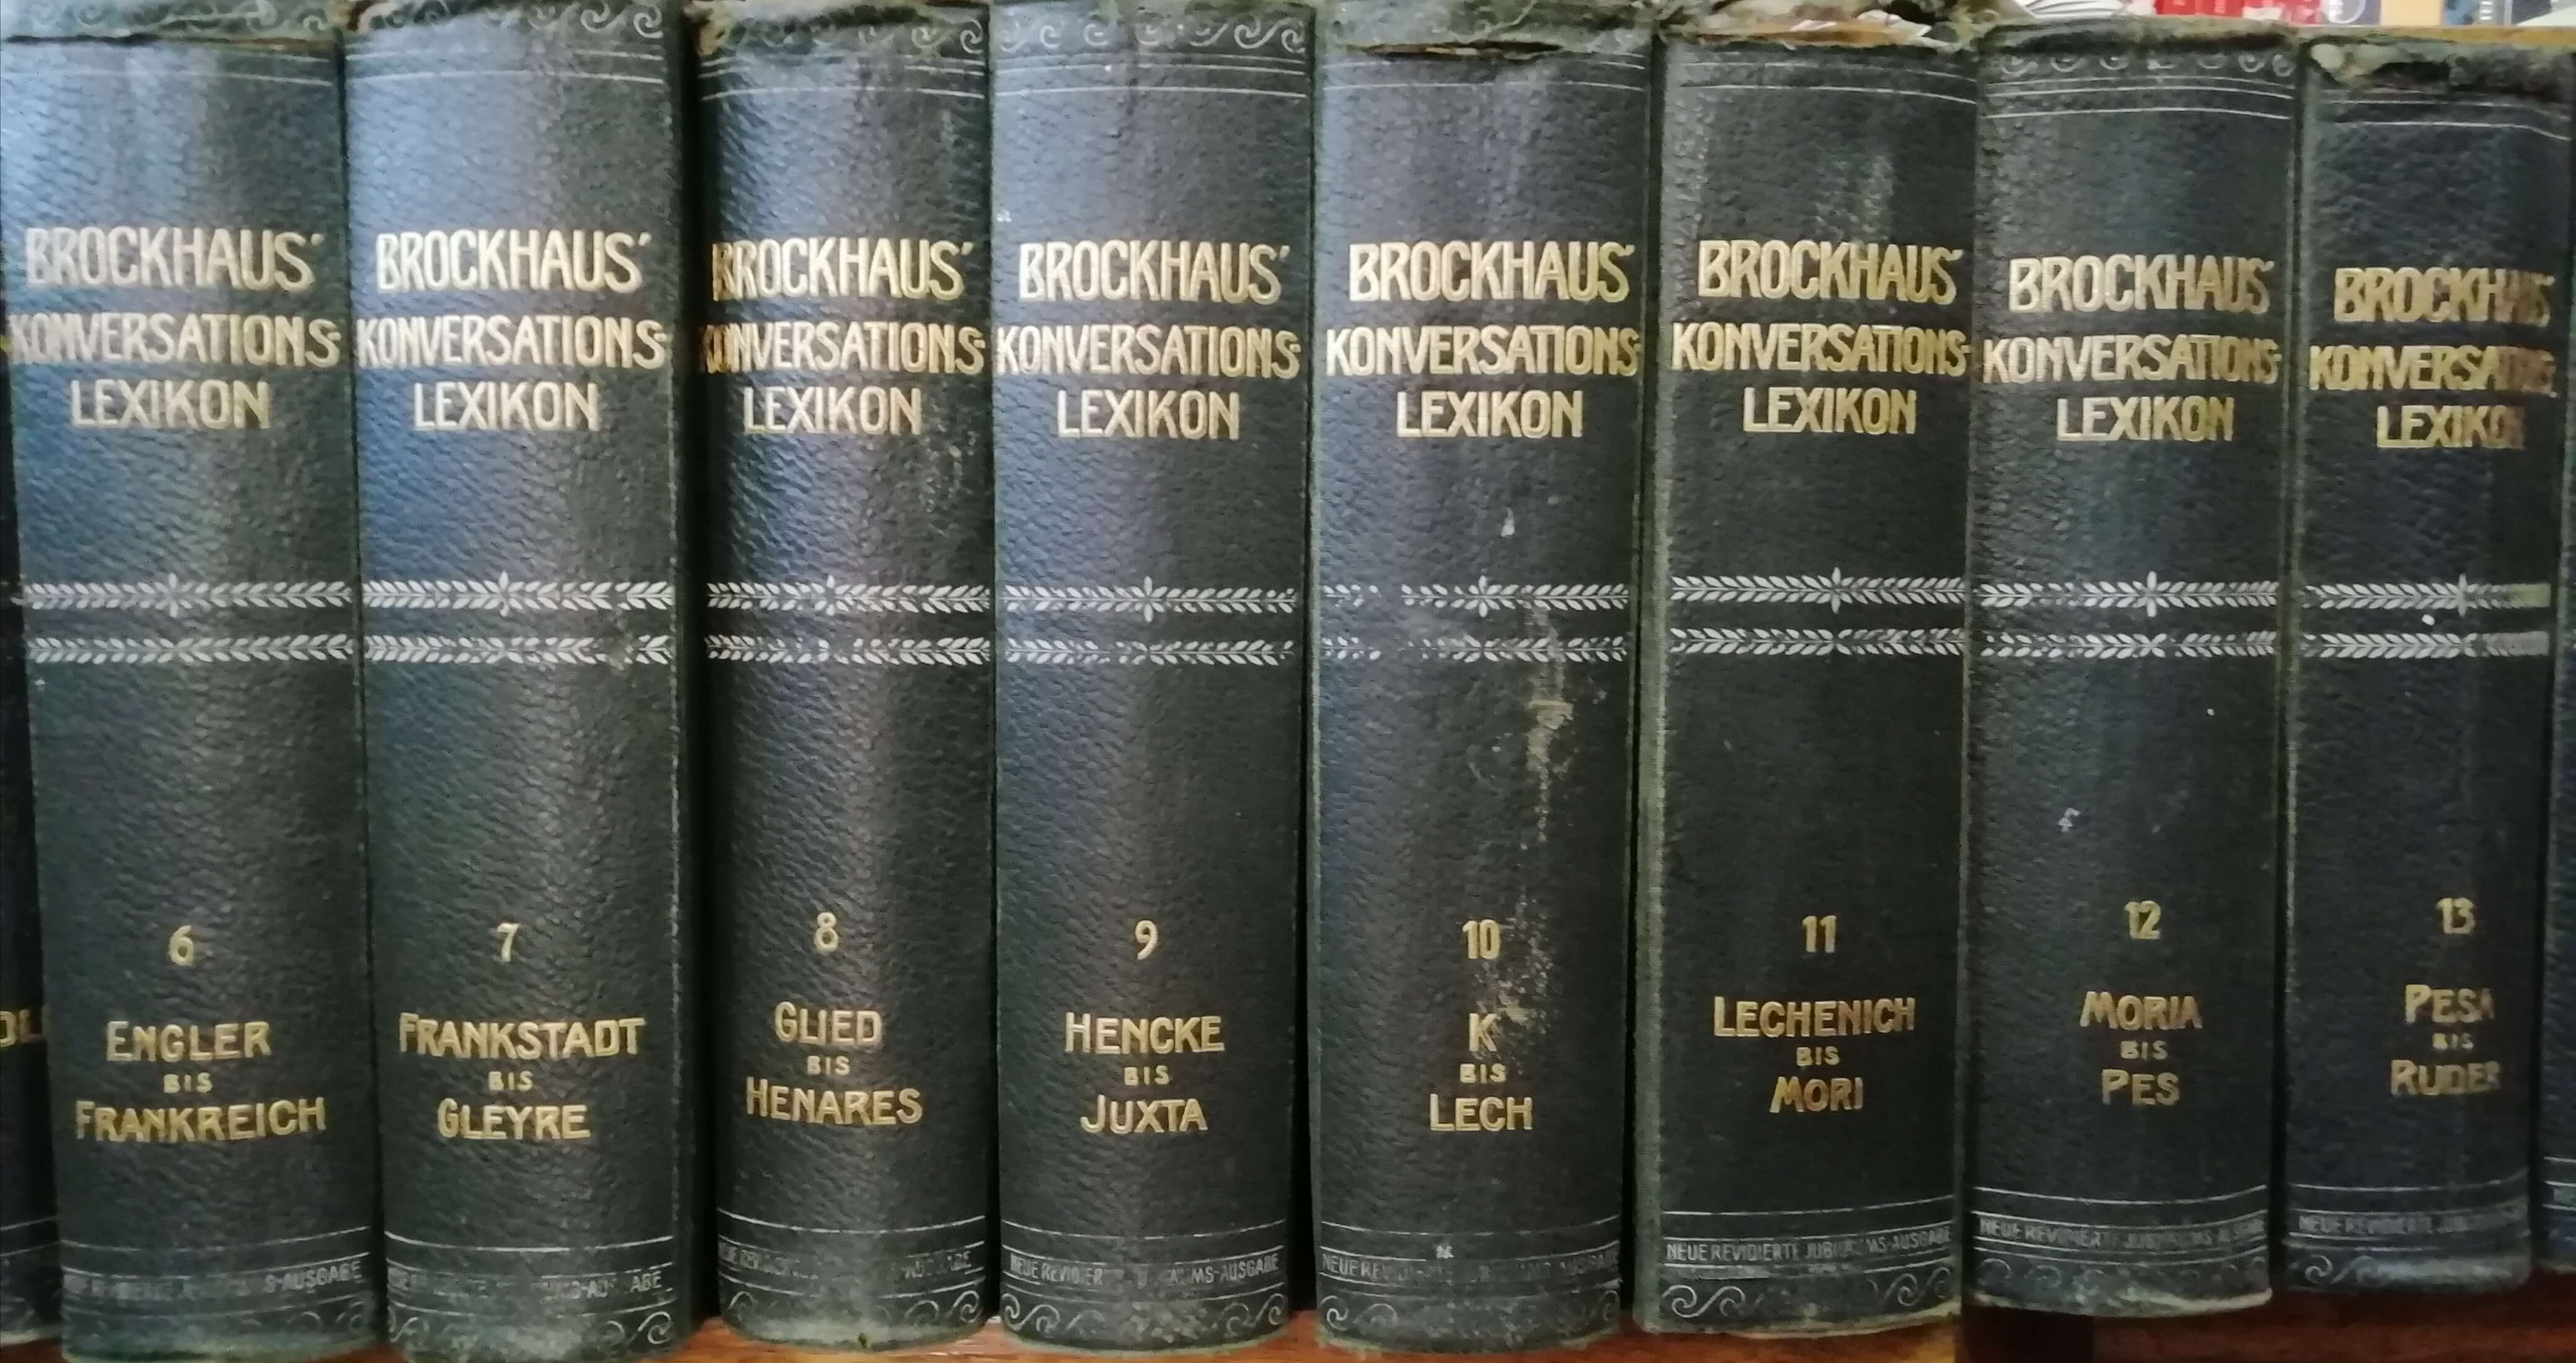 Brockhaus  konversationslexikon